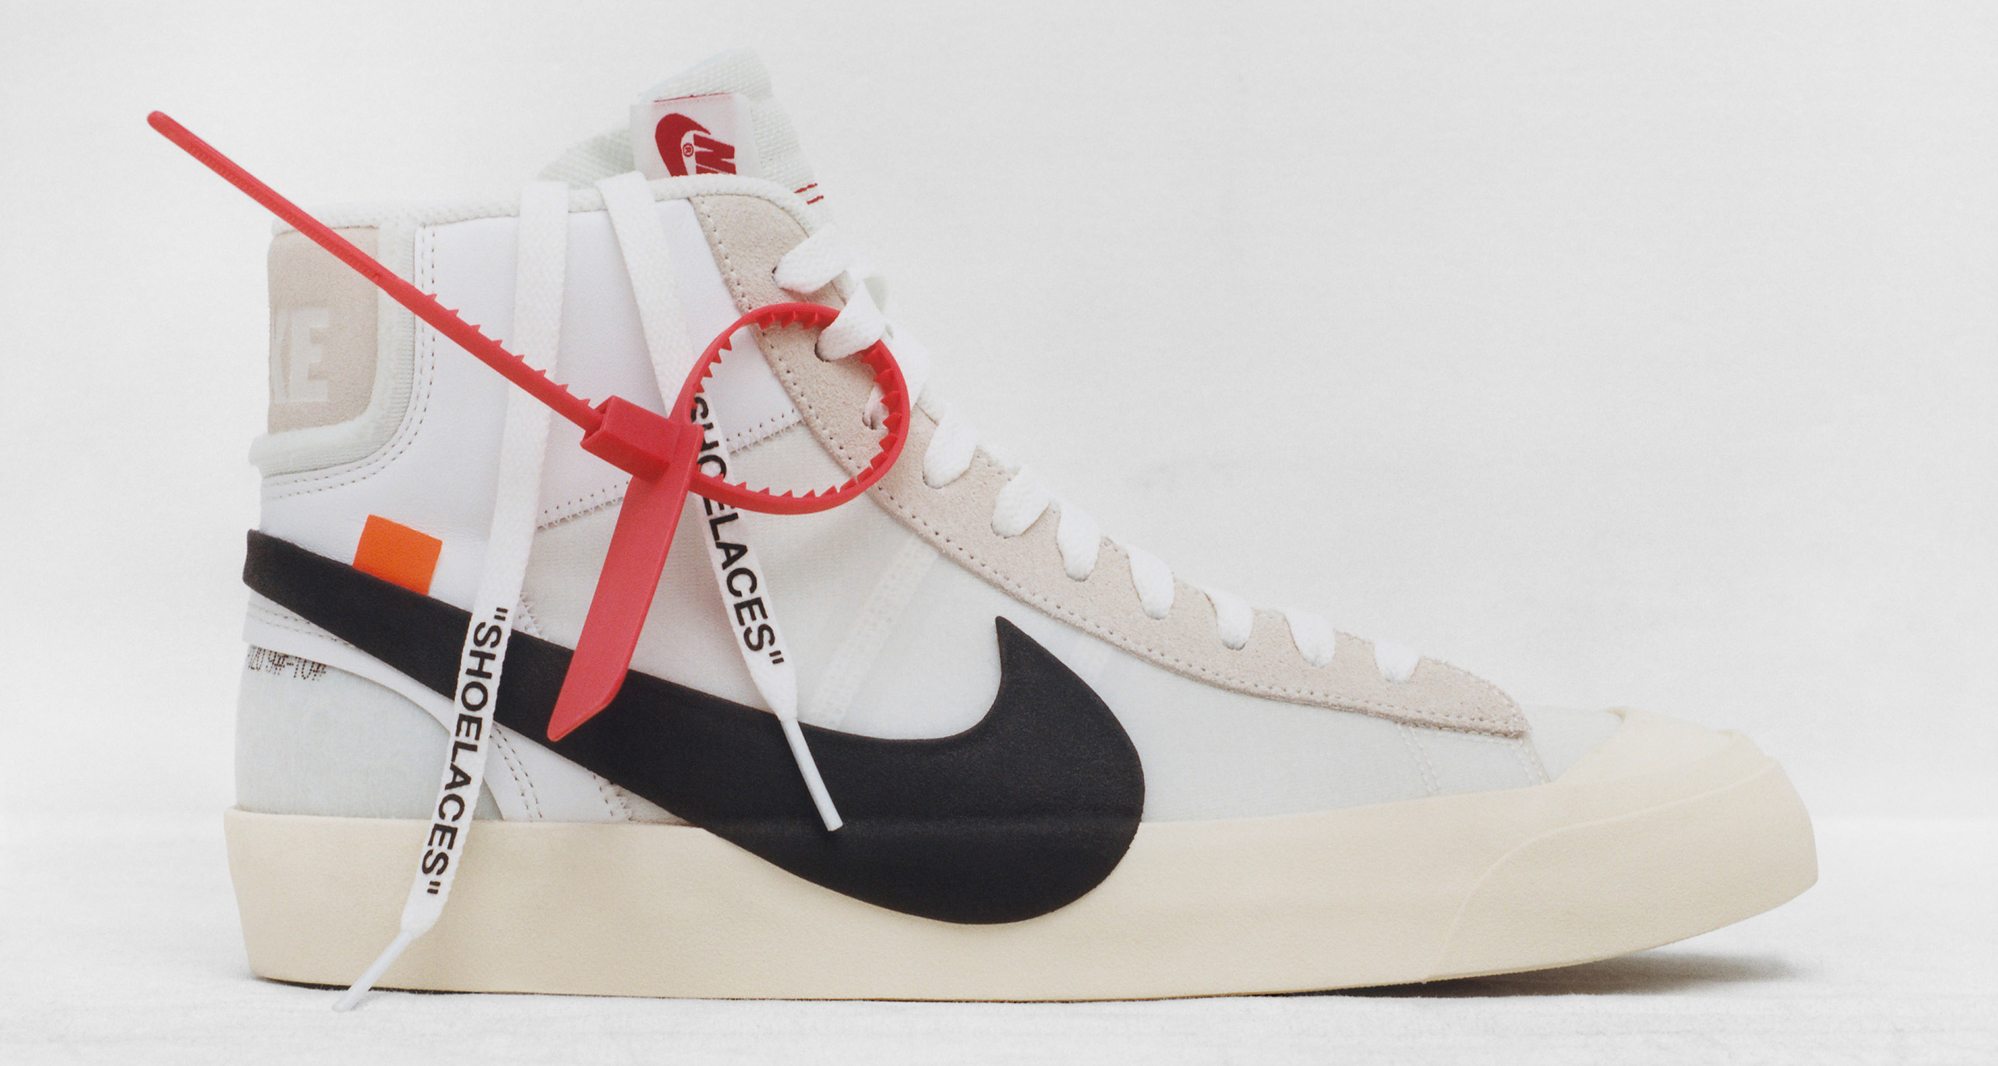 Off-White x Nike Blazer // Release Date 